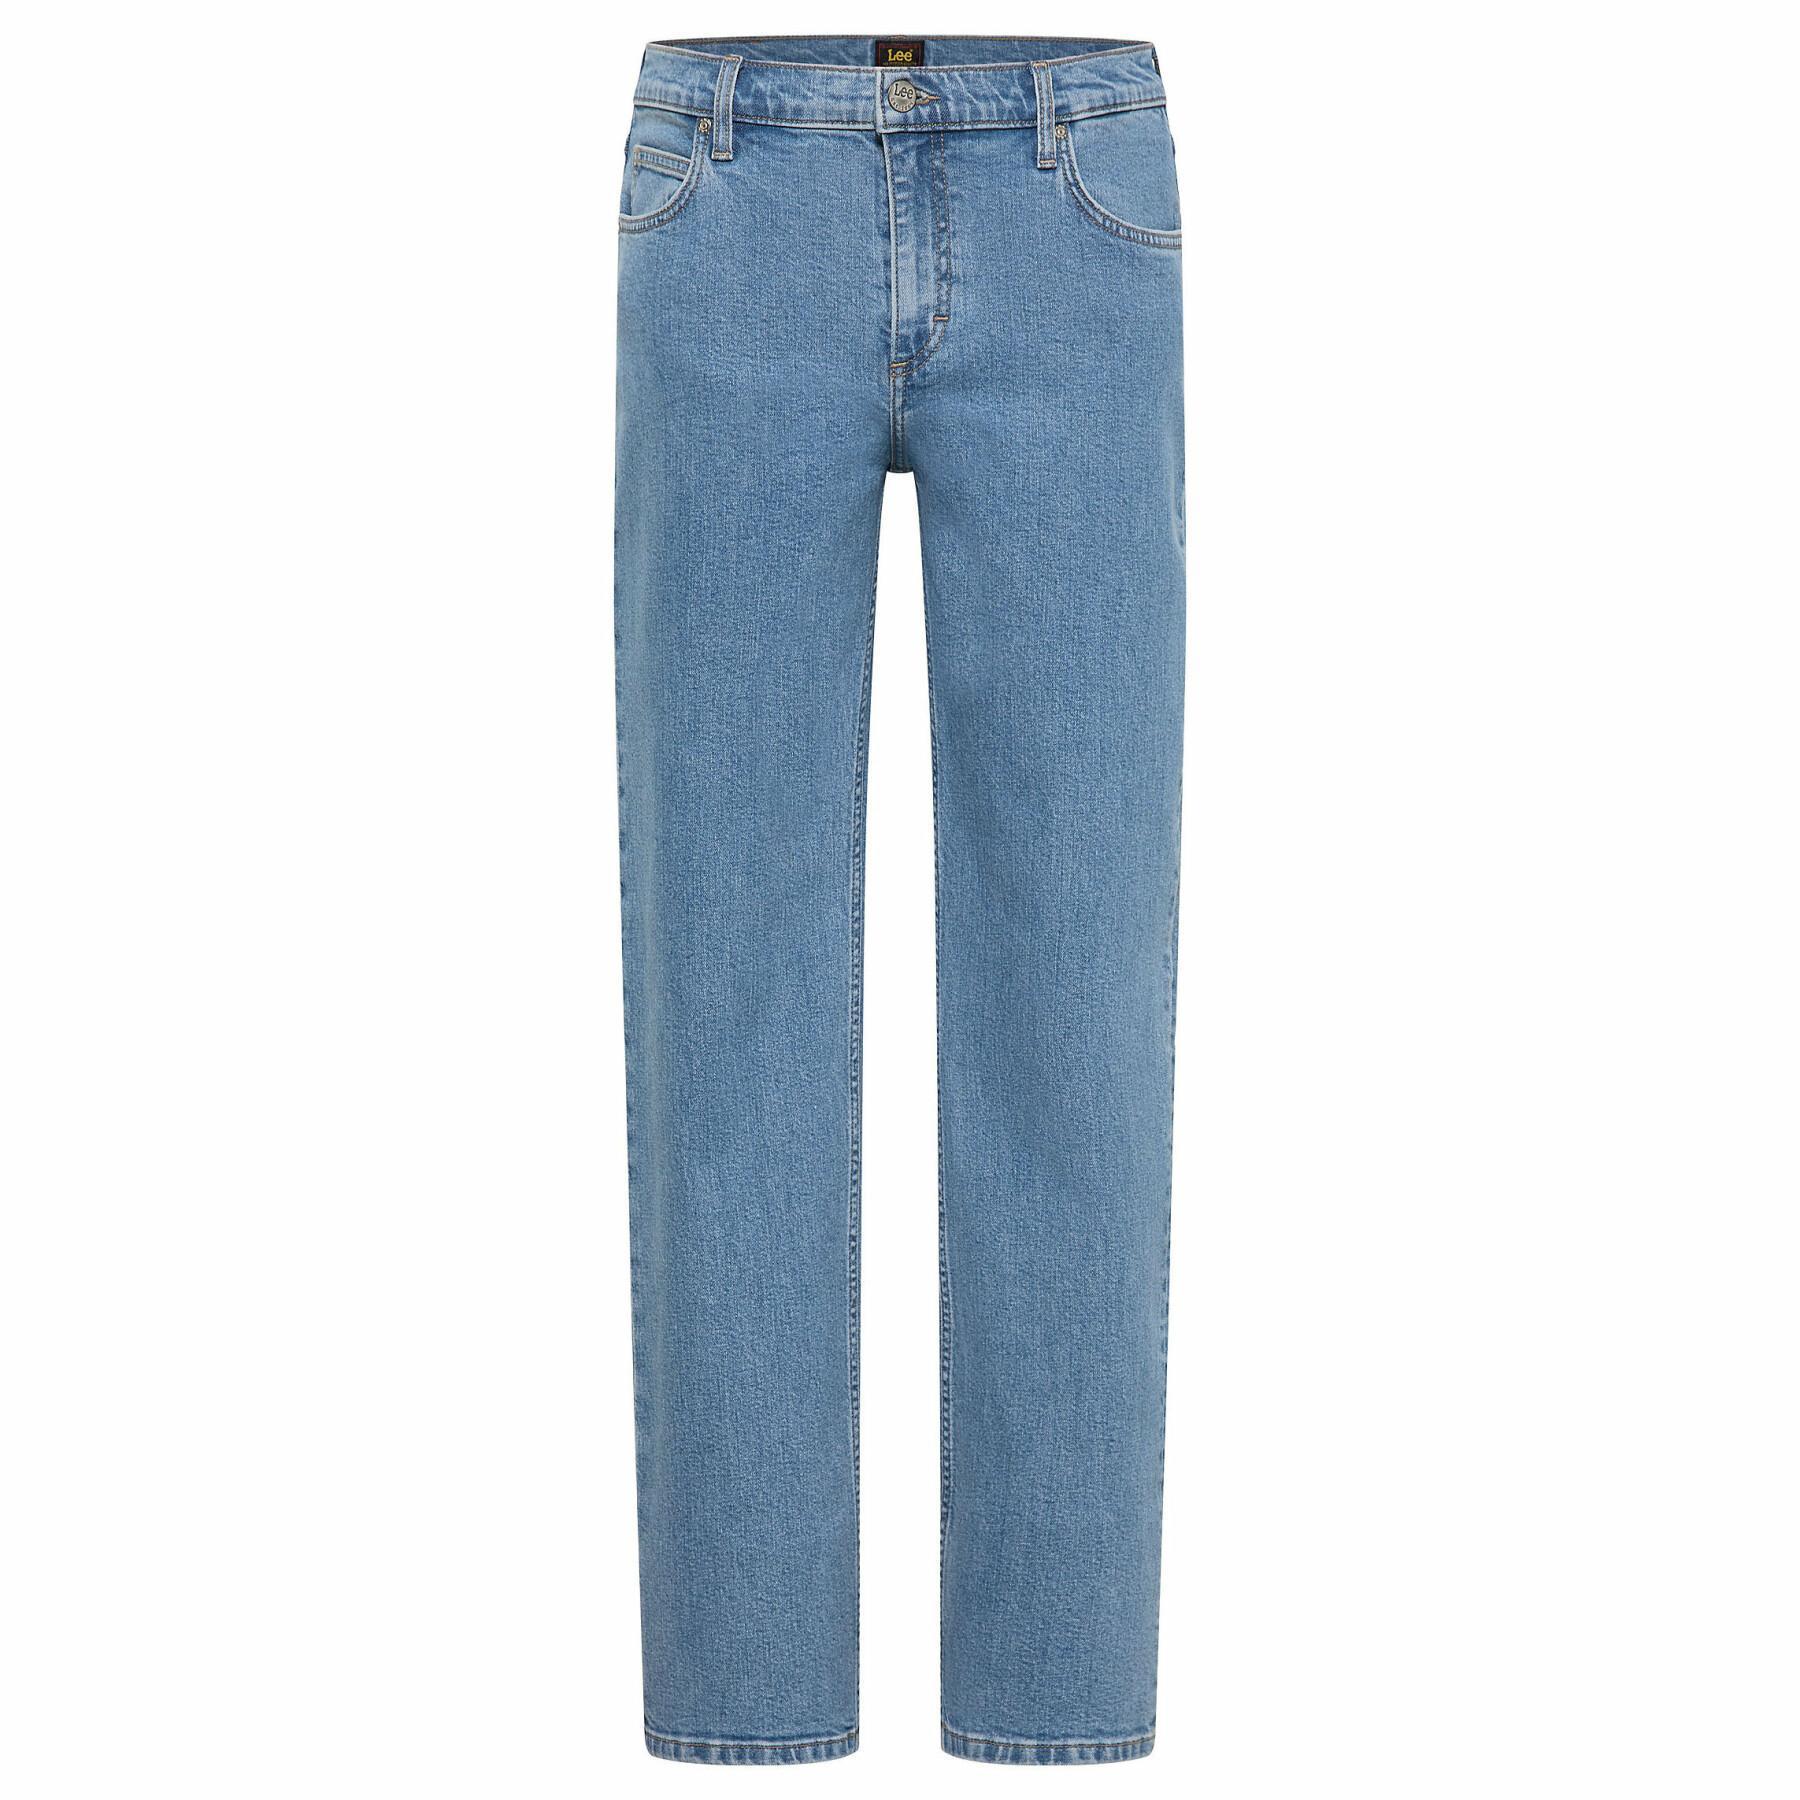 Womens Lee Riders Jeans Size 16 Regular Fit W36 L29 Dark Blue Trousers.  Used | eBay